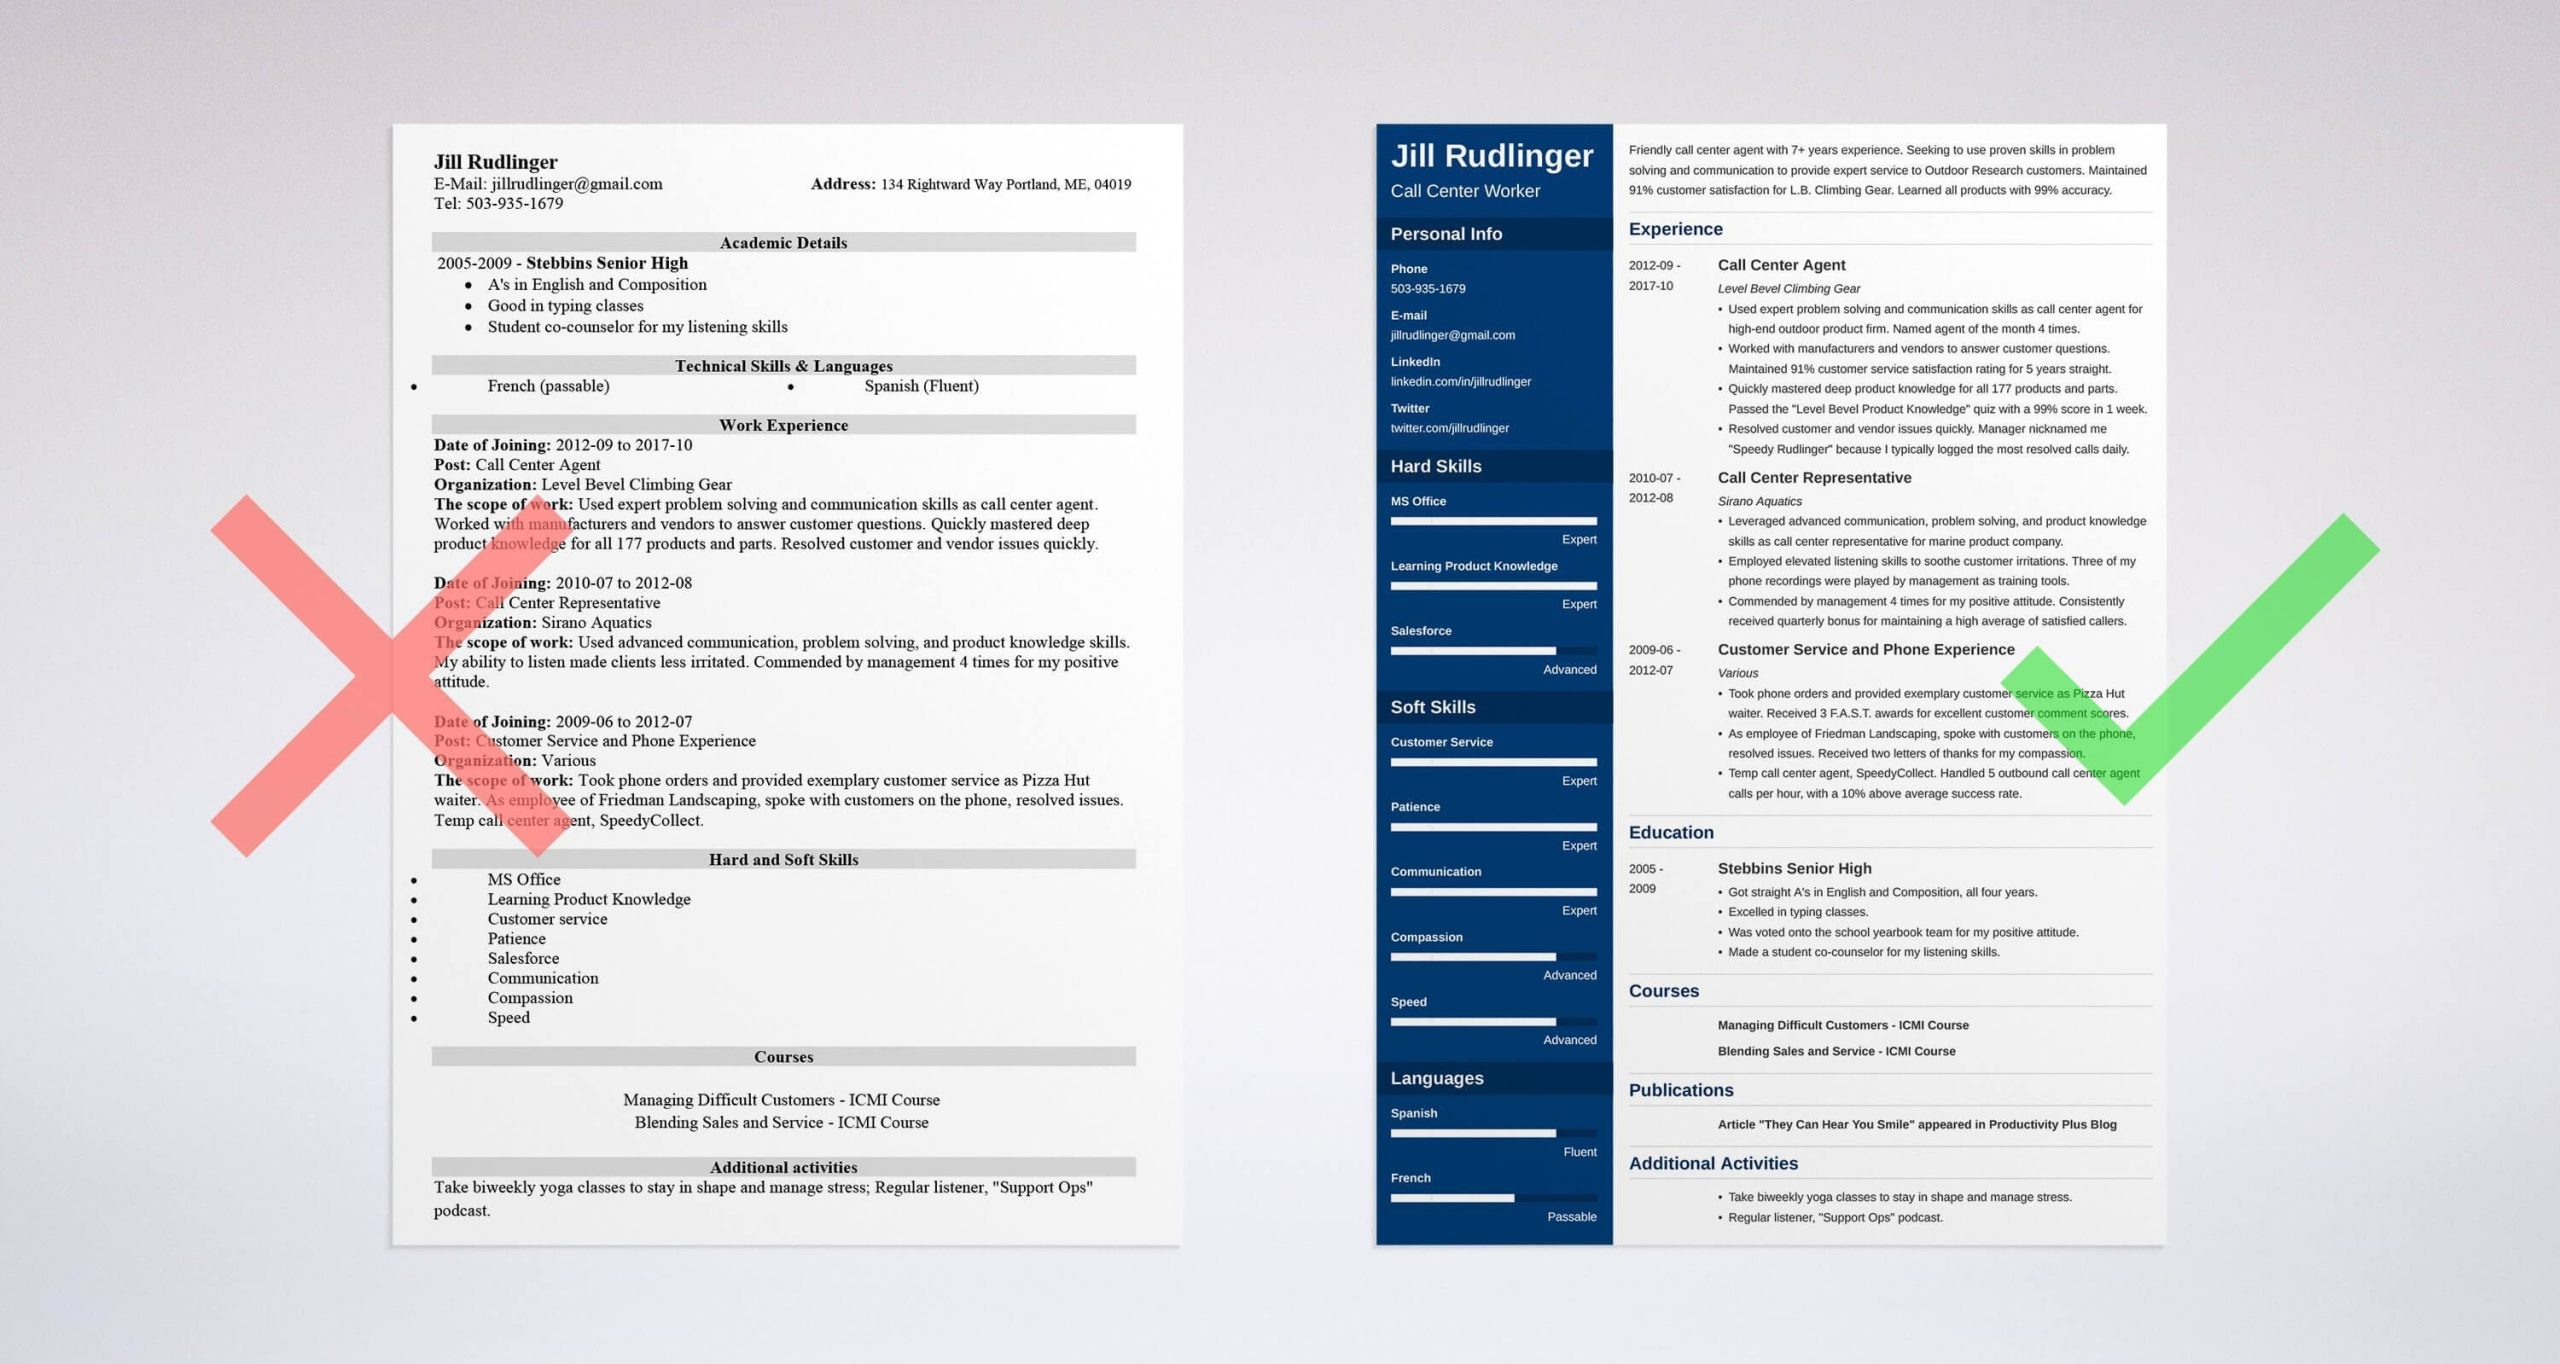 Sample Resume for Experienced Call Center Agent Call Center Resume Examples [lancarrezekiqskills & Job Description]